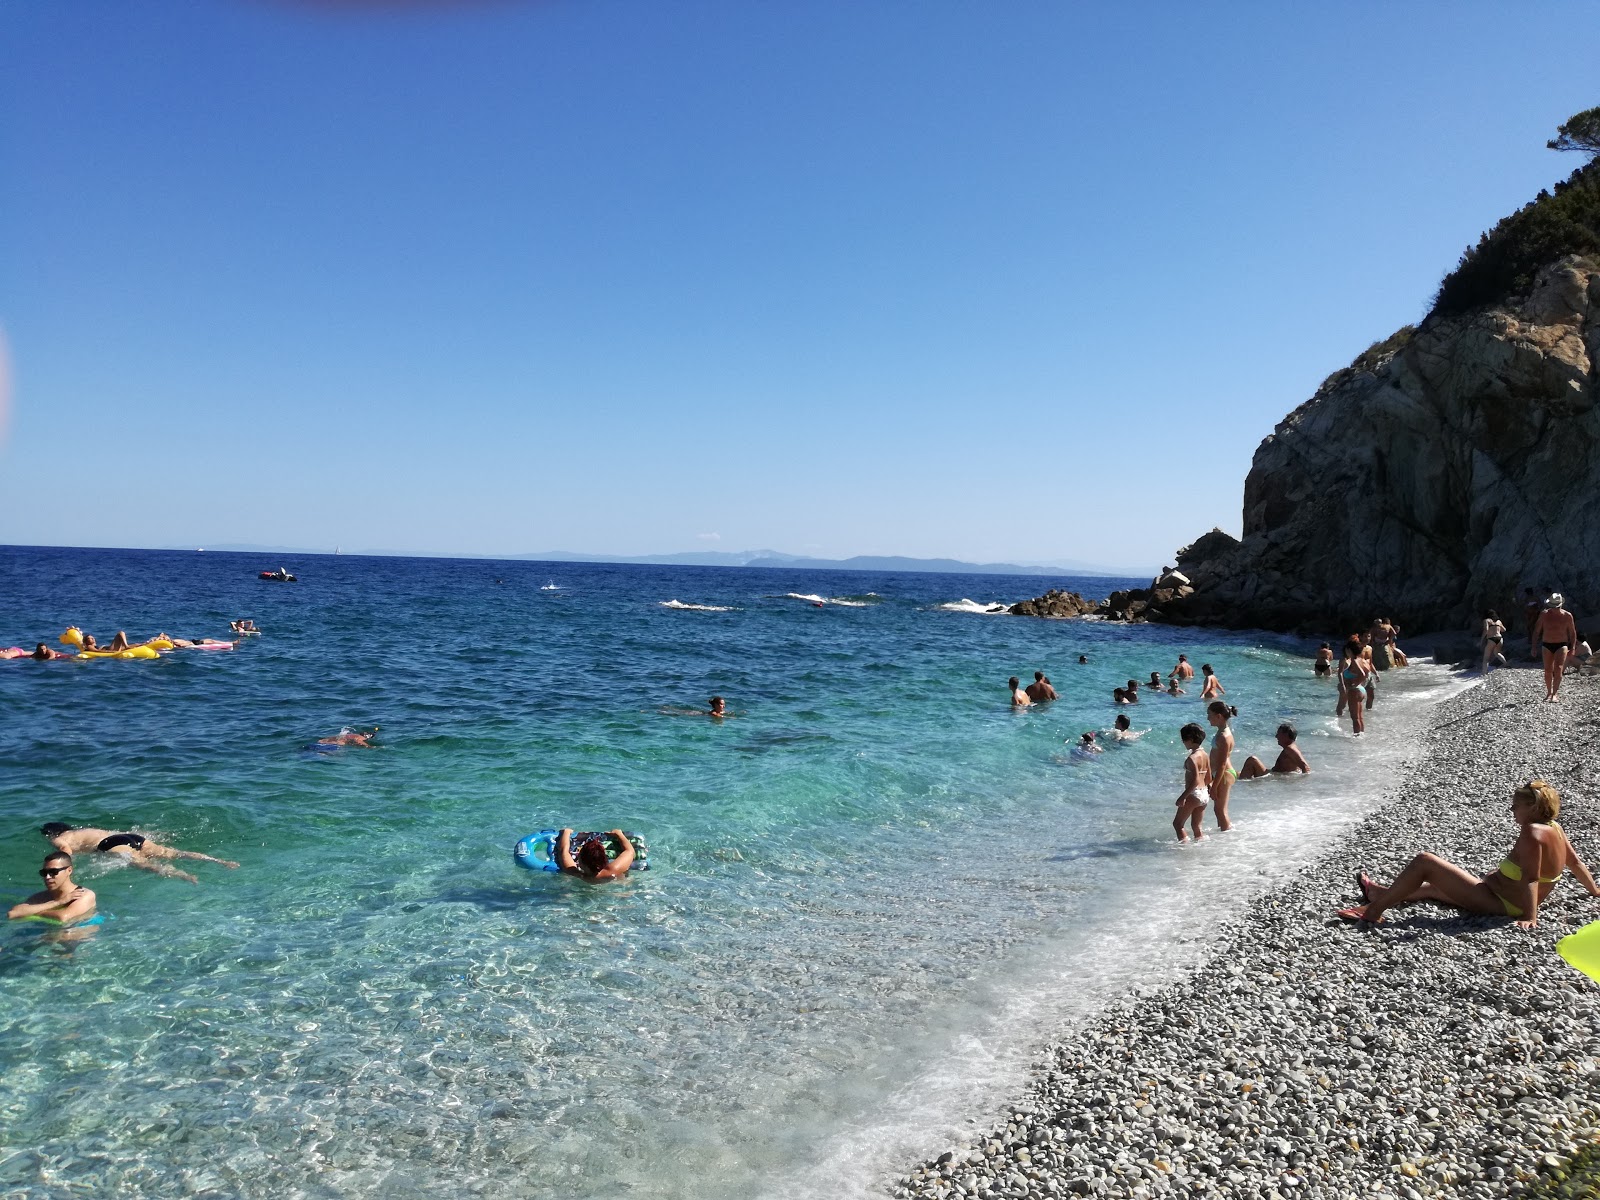 Foto van Spiaggia La Sorgente met hoog niveau van netheid